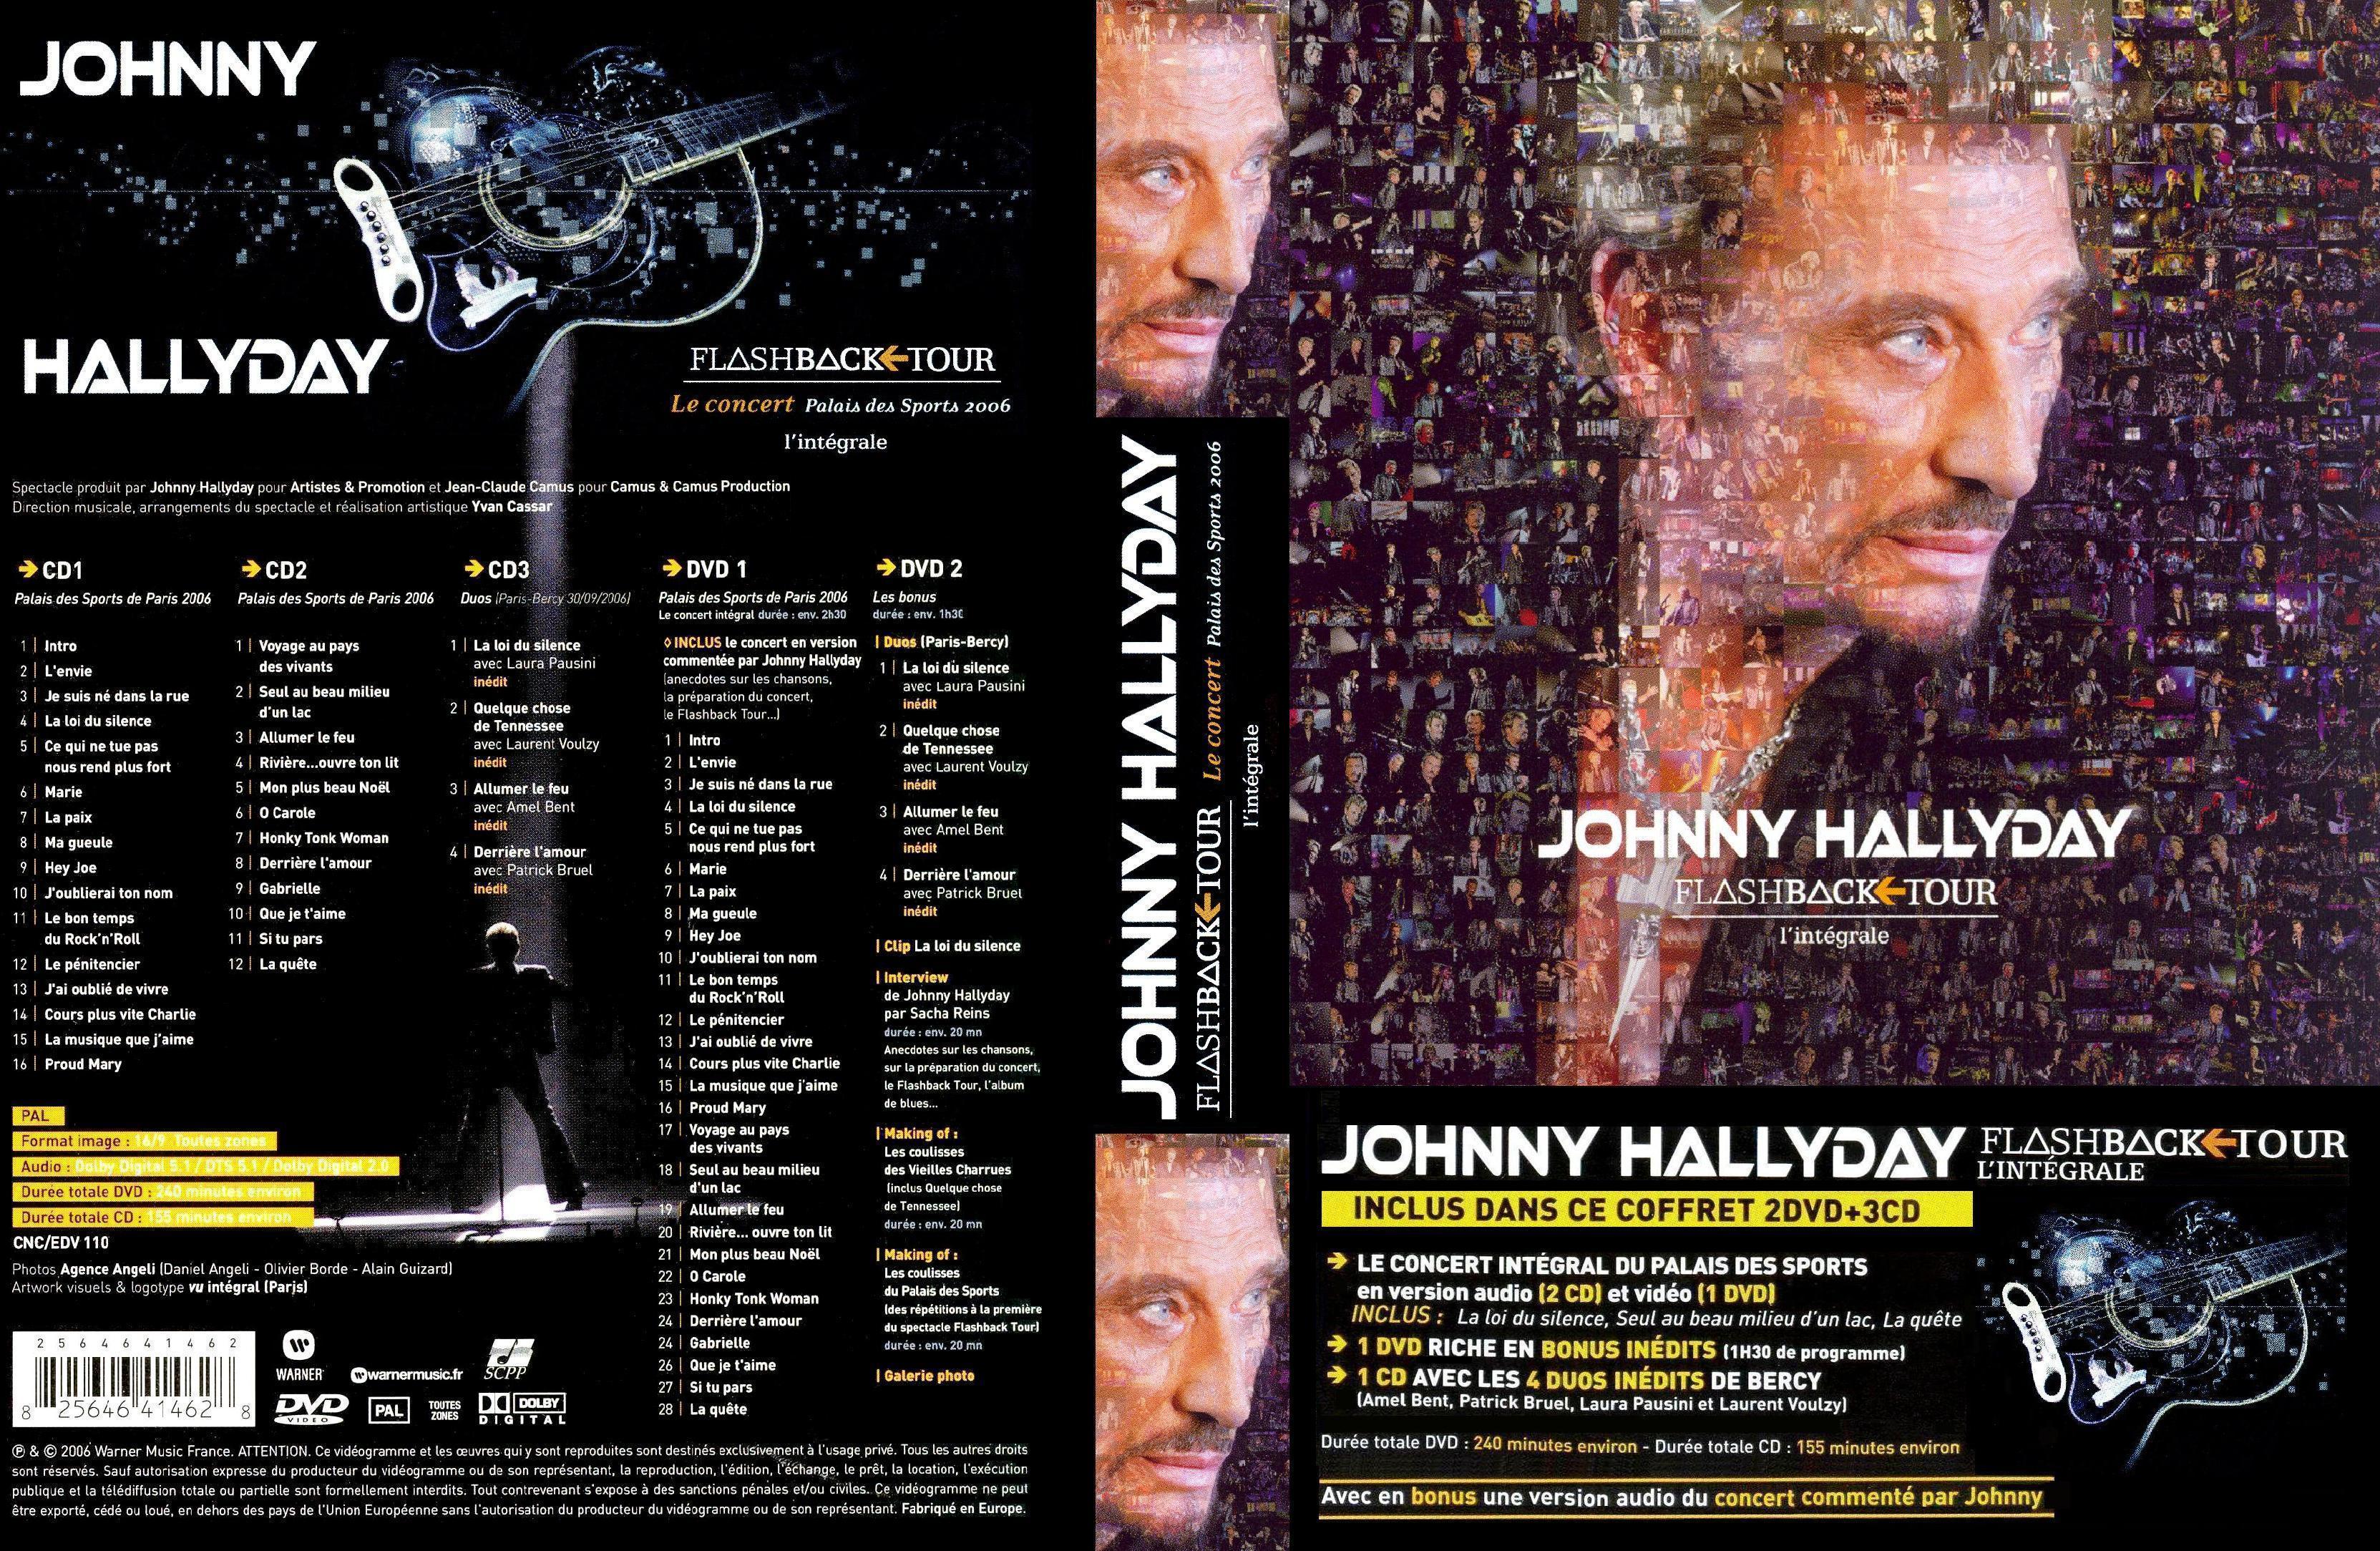 Jaquette DVD Johnny Hallyday Flashback Tour 2006 COFFRET